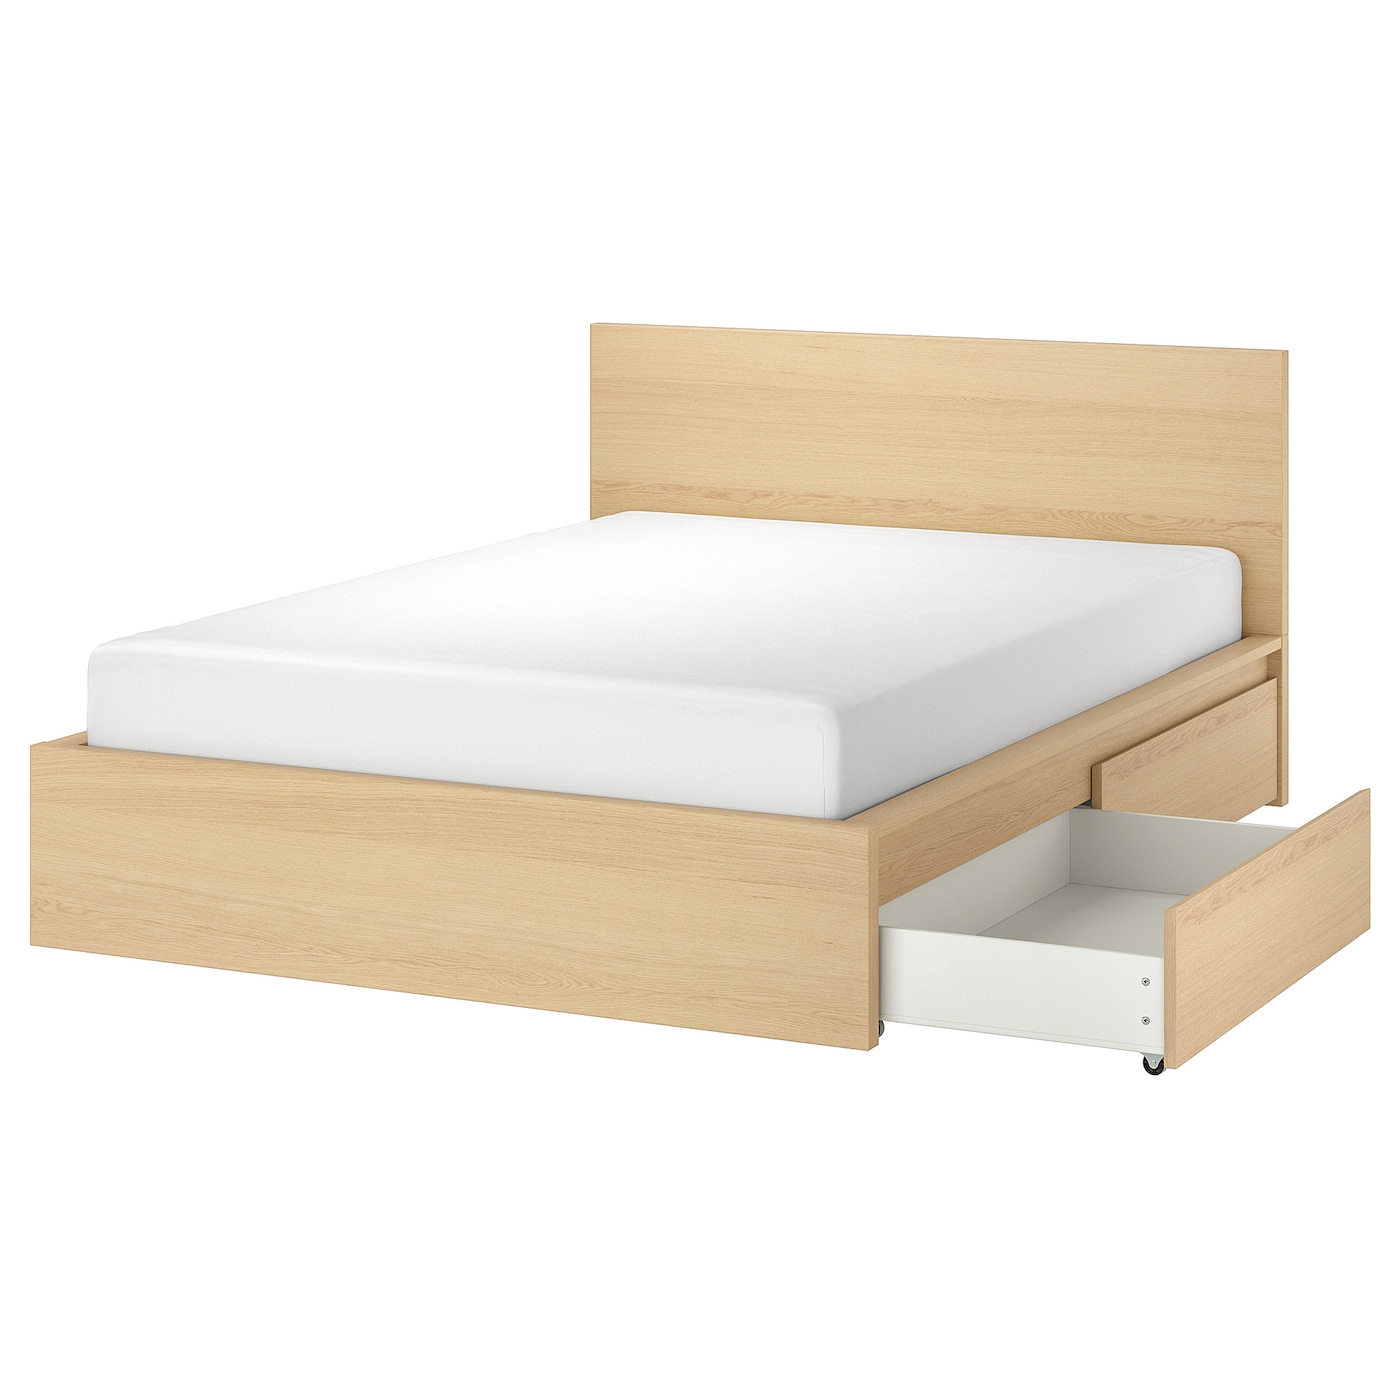 Каркас кровати с 4 ящиками для хранения - IKEA MALM, 200х180 см, шпон беленого мореного дуба, МАЛЬМ ИКЕА